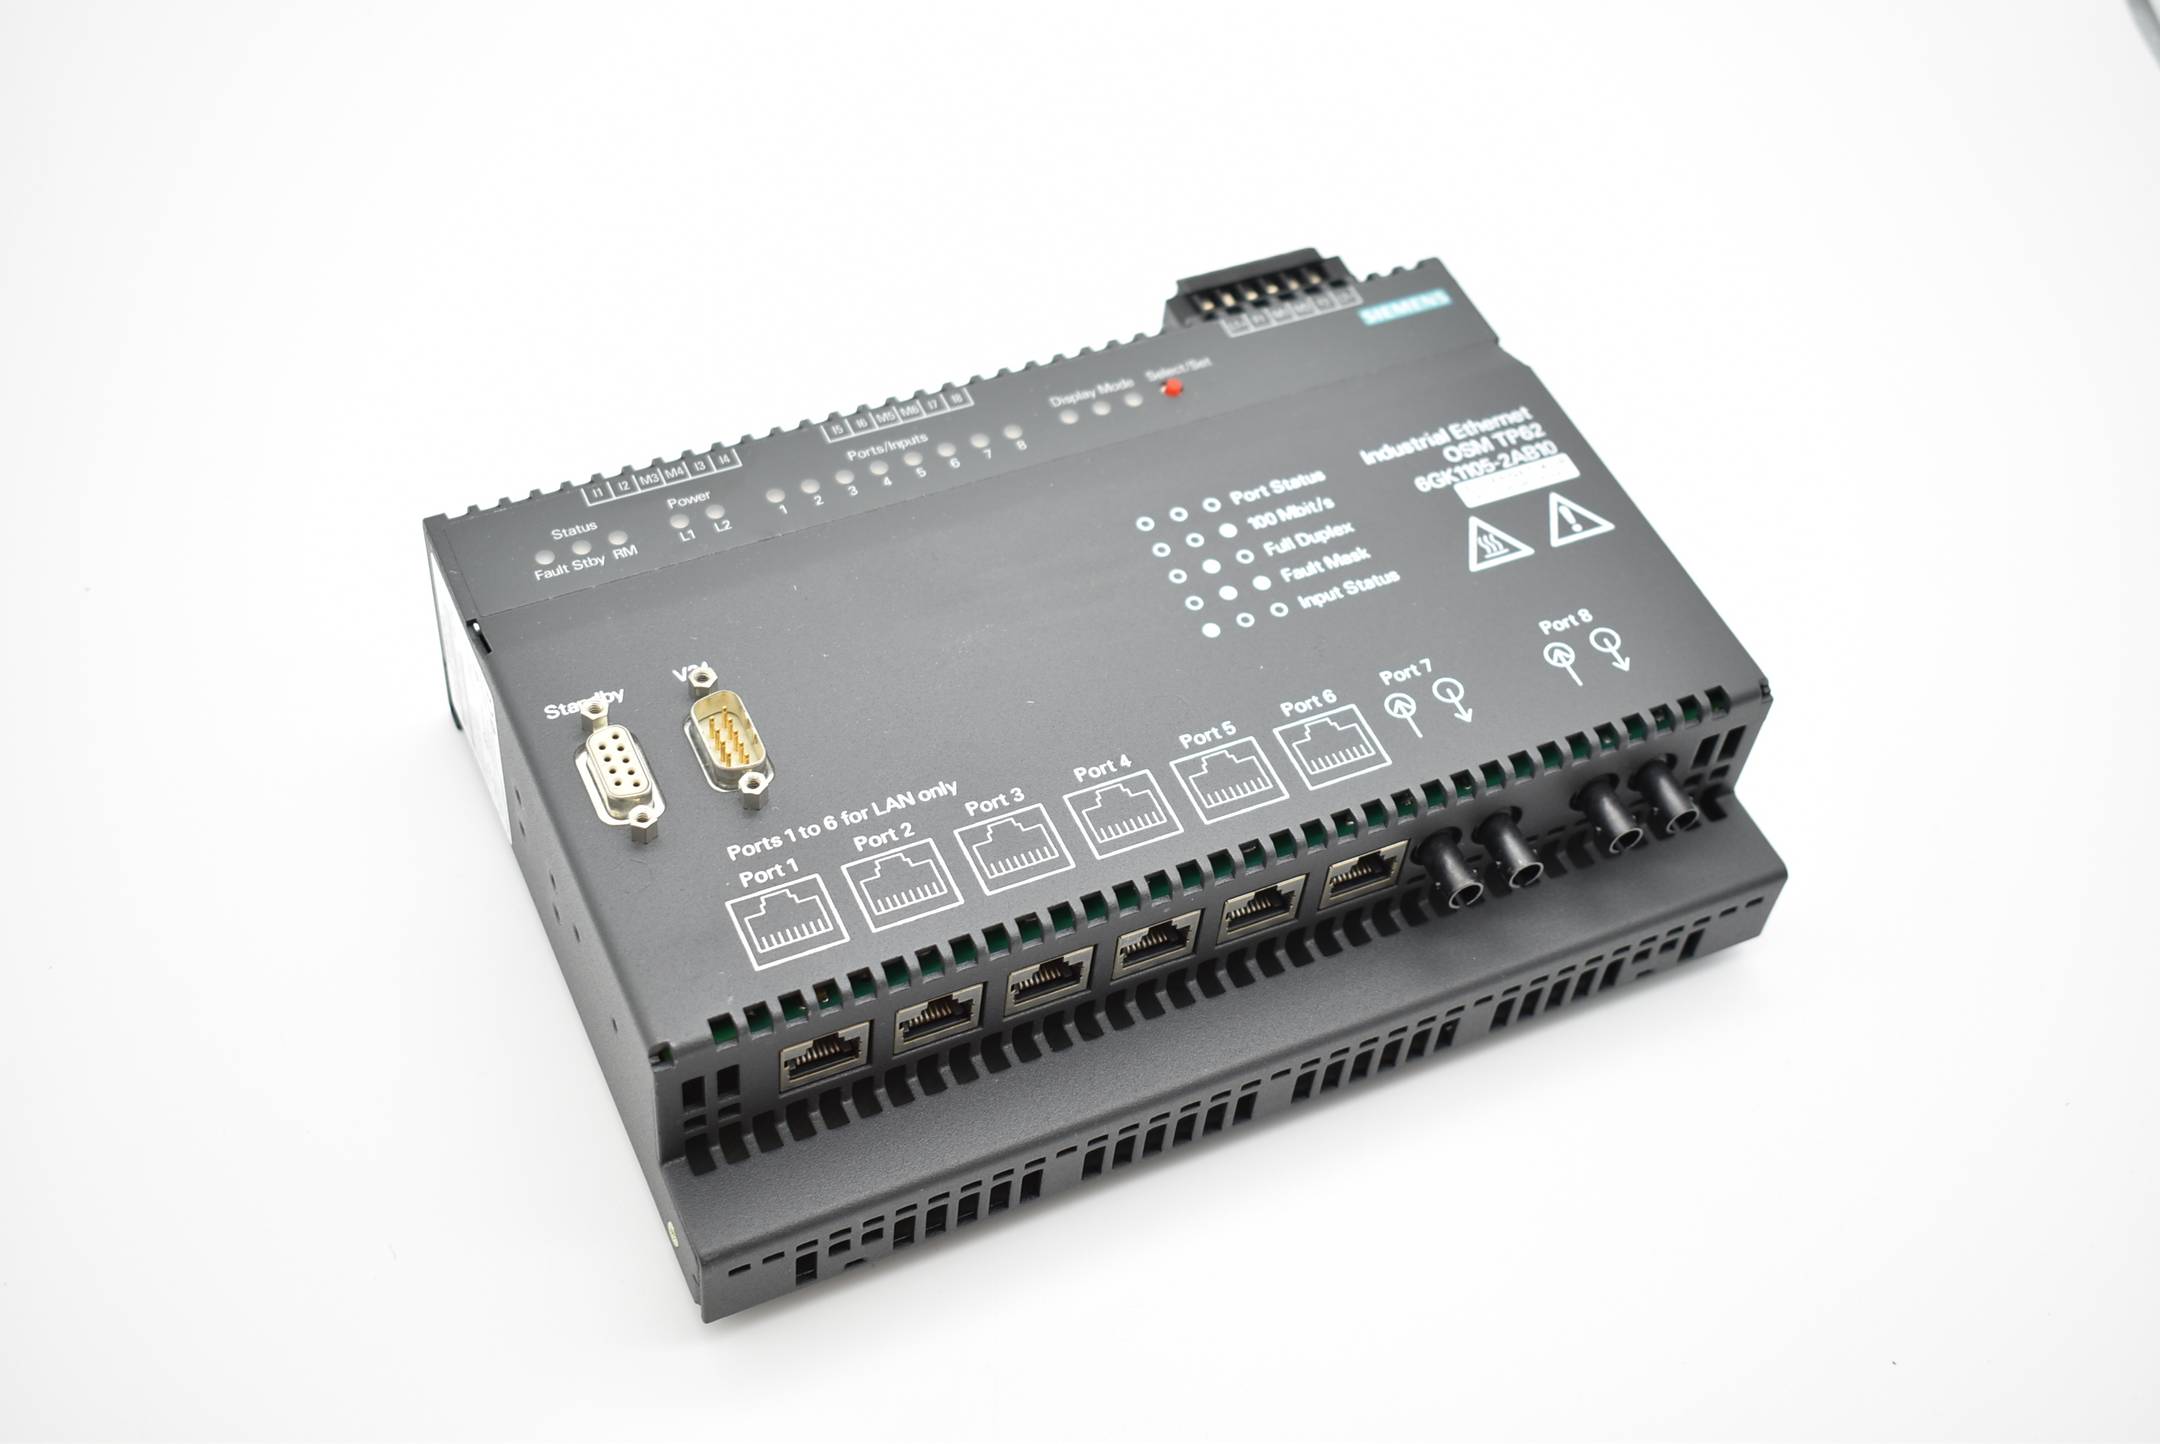 Siemens simatic NET Ethernet Module 6GK1105-2AB10 ( 6GK1 105-2AB10 ) E.9